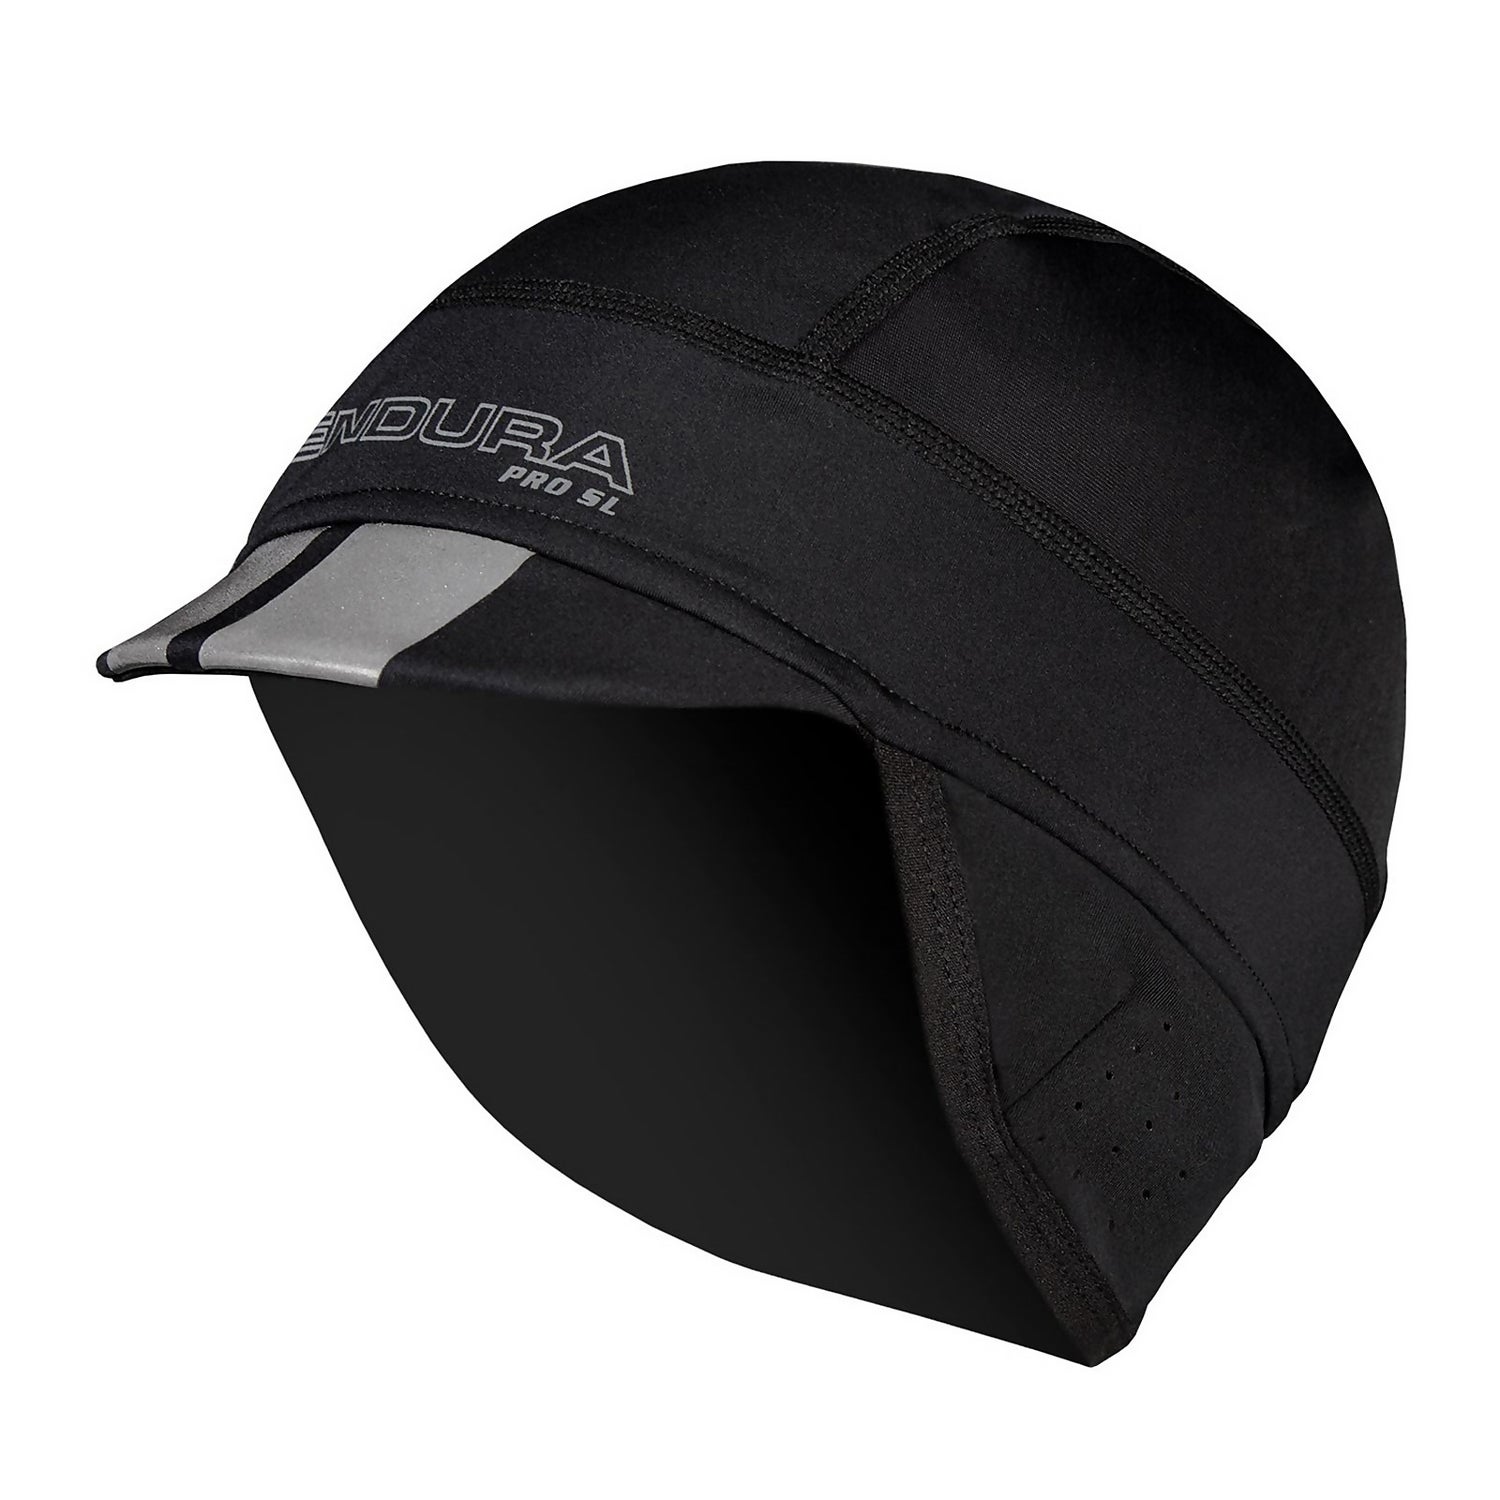 Pro SL Winter Cap - Black